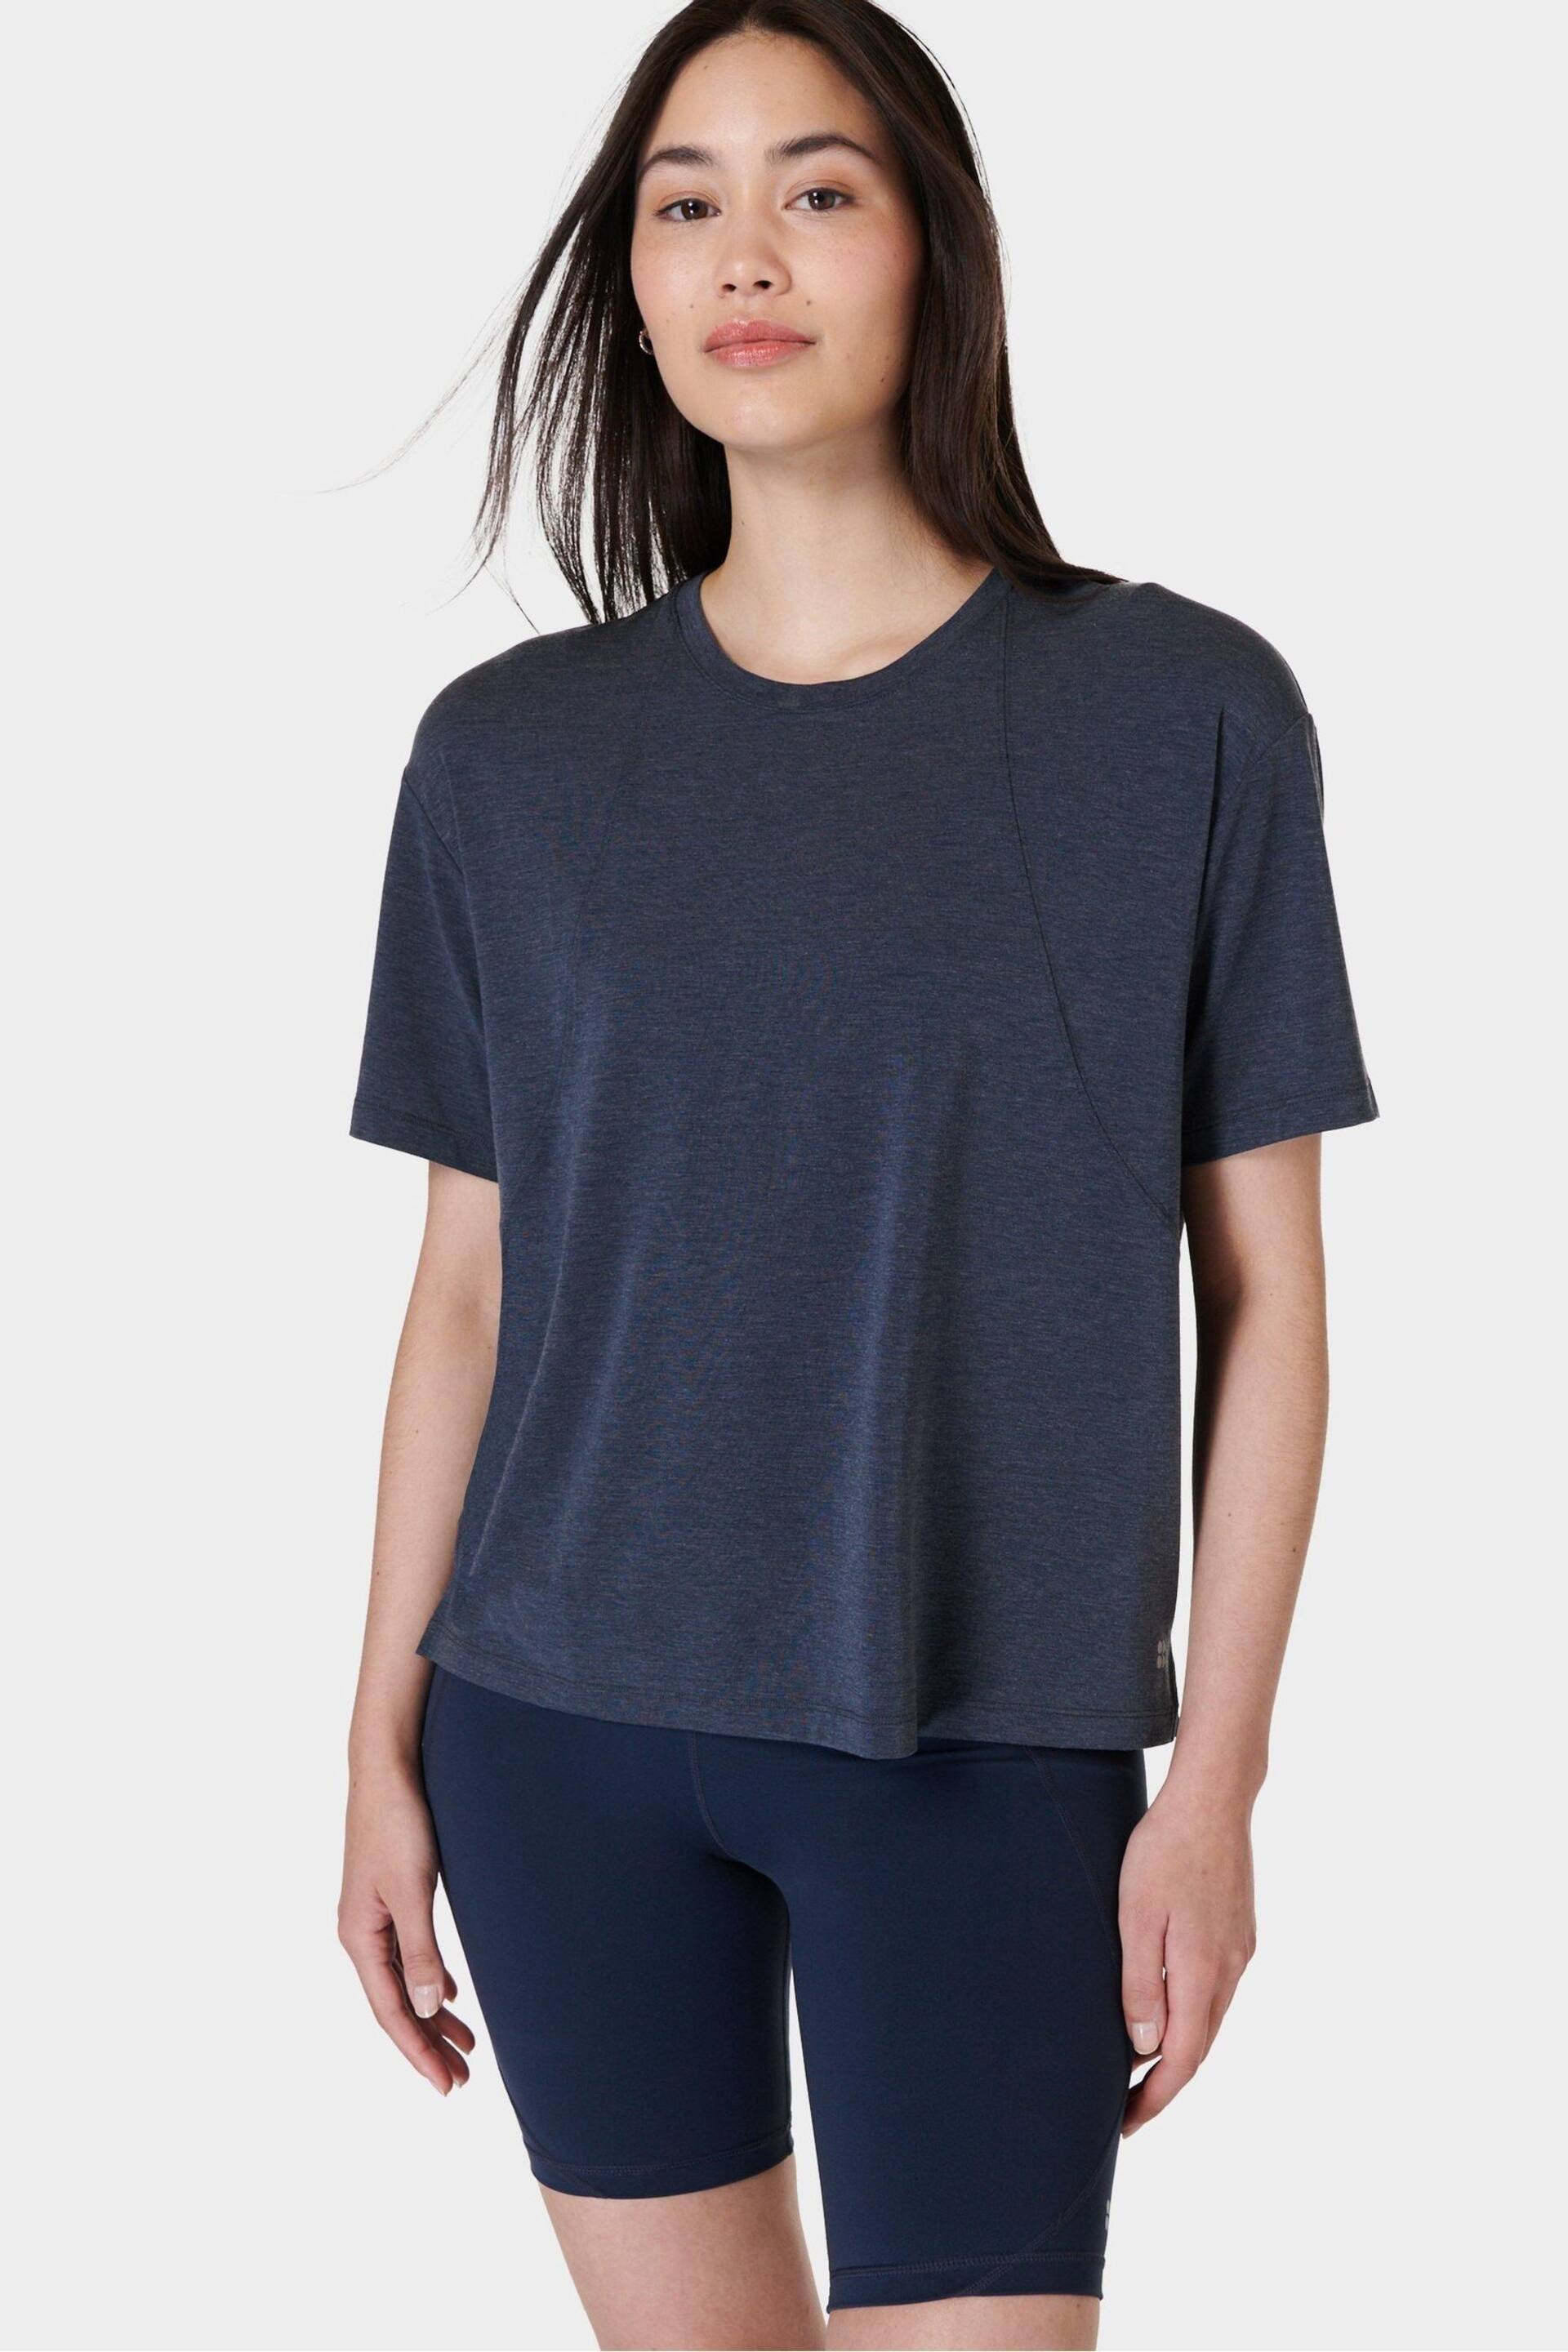 Sweaty Betty Navy Blue Soft Flow Studio T-Shirt - Image 1 of 8